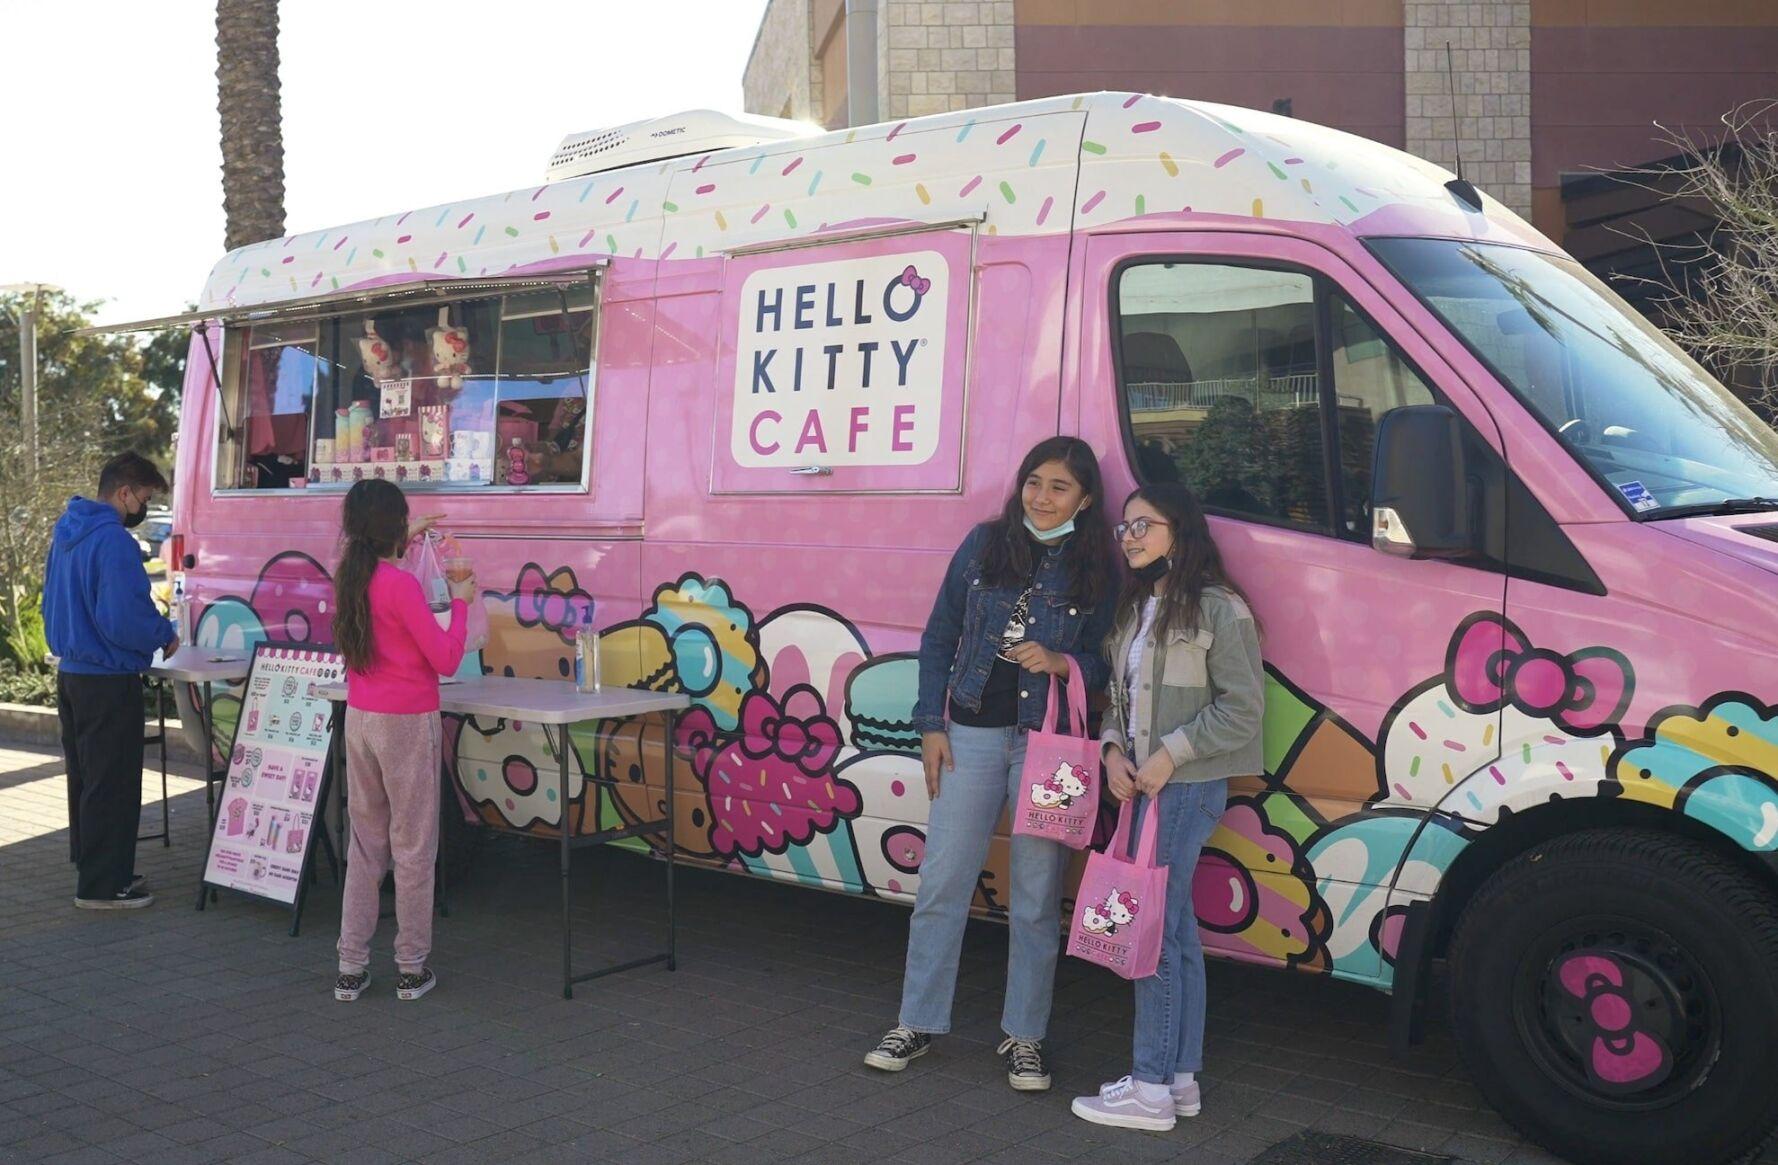 Hello Kitty's Adorable Food Truck Rolls Through Glendale Next